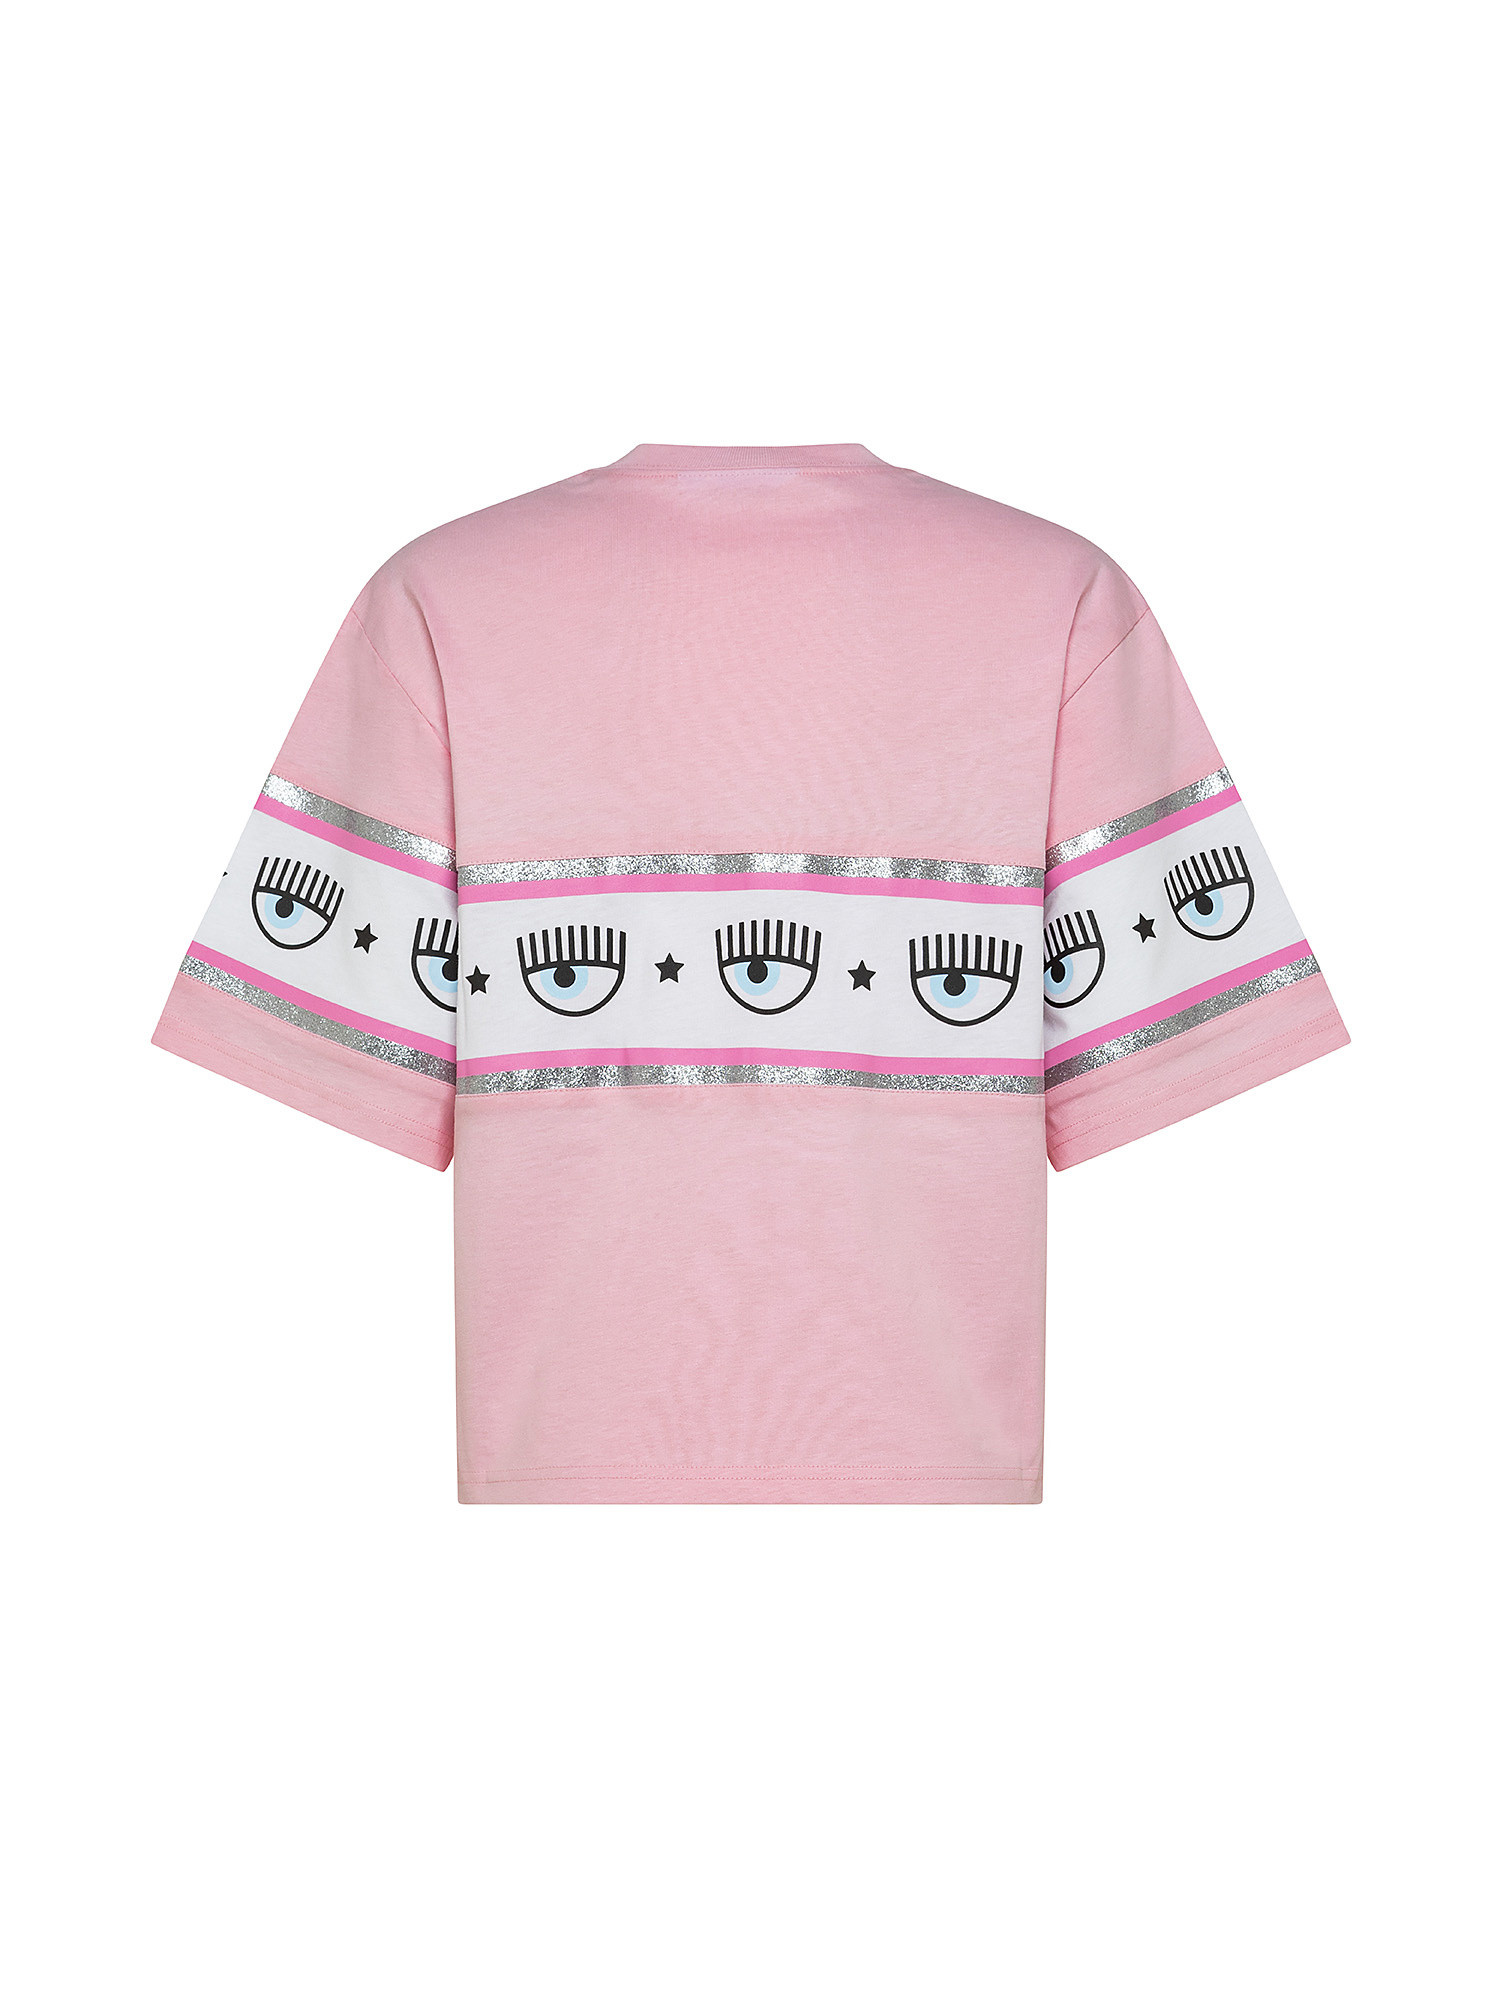 Logomania t-shirt, Pink, large image number 1